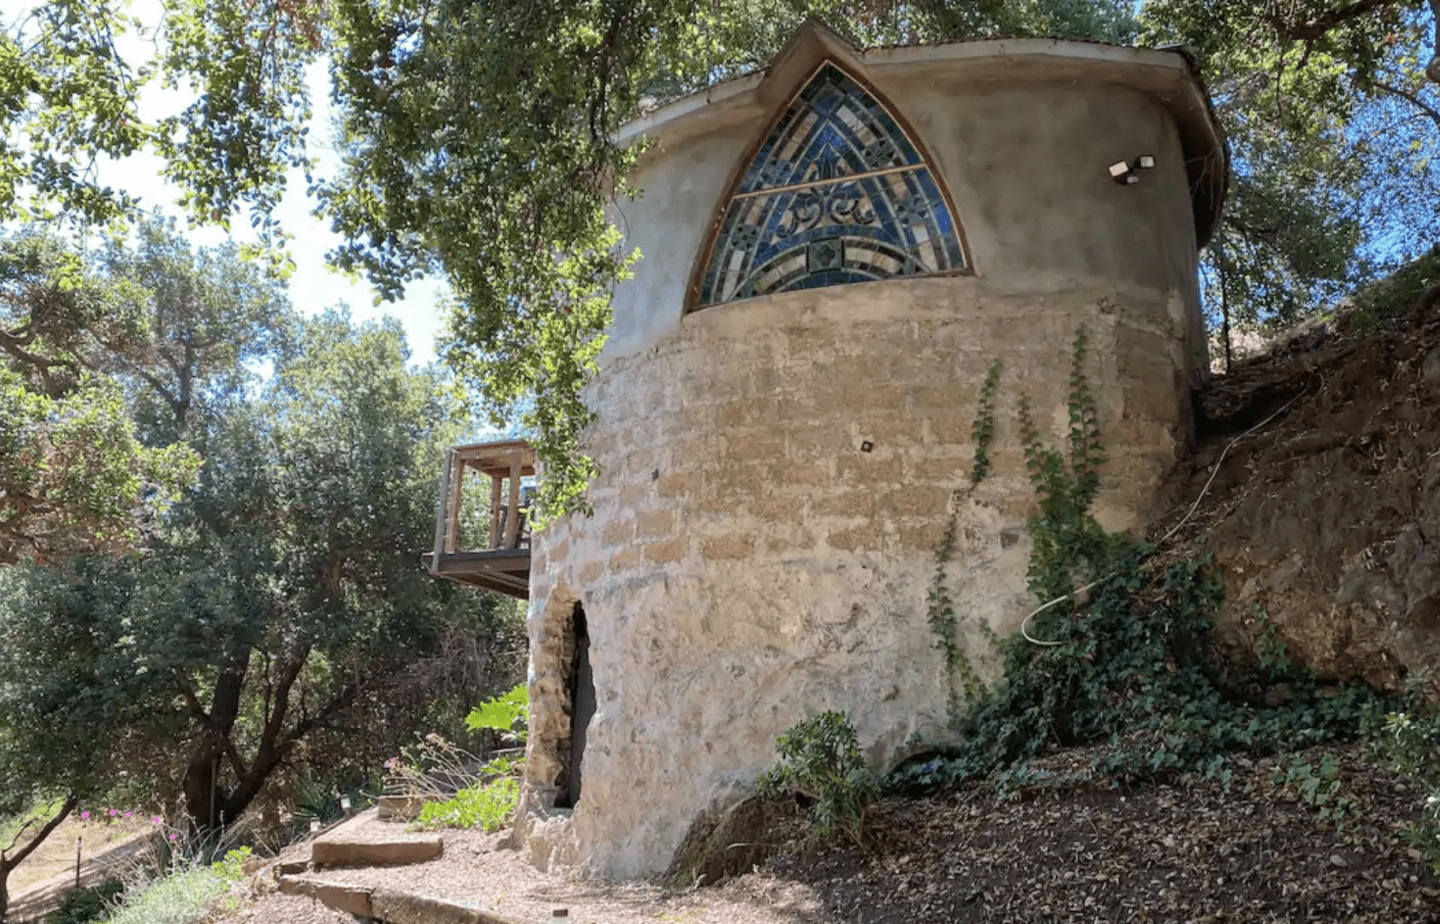 Mini “Castle” at Magical Malibu Ranch